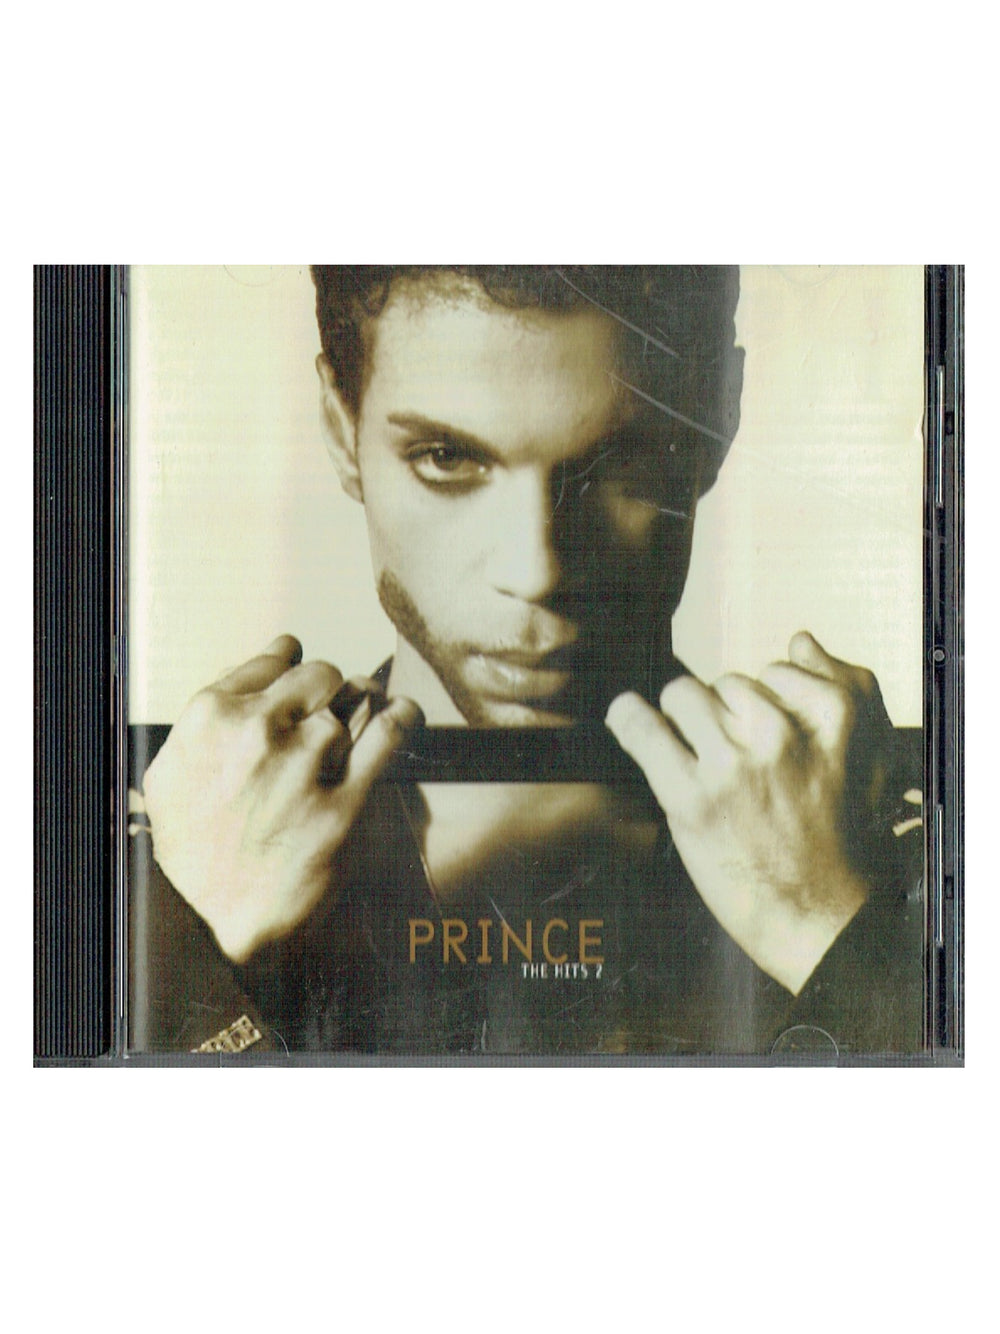 Prince The Hits 2 CD Album 1993 Original Release 18 Tracks WE833